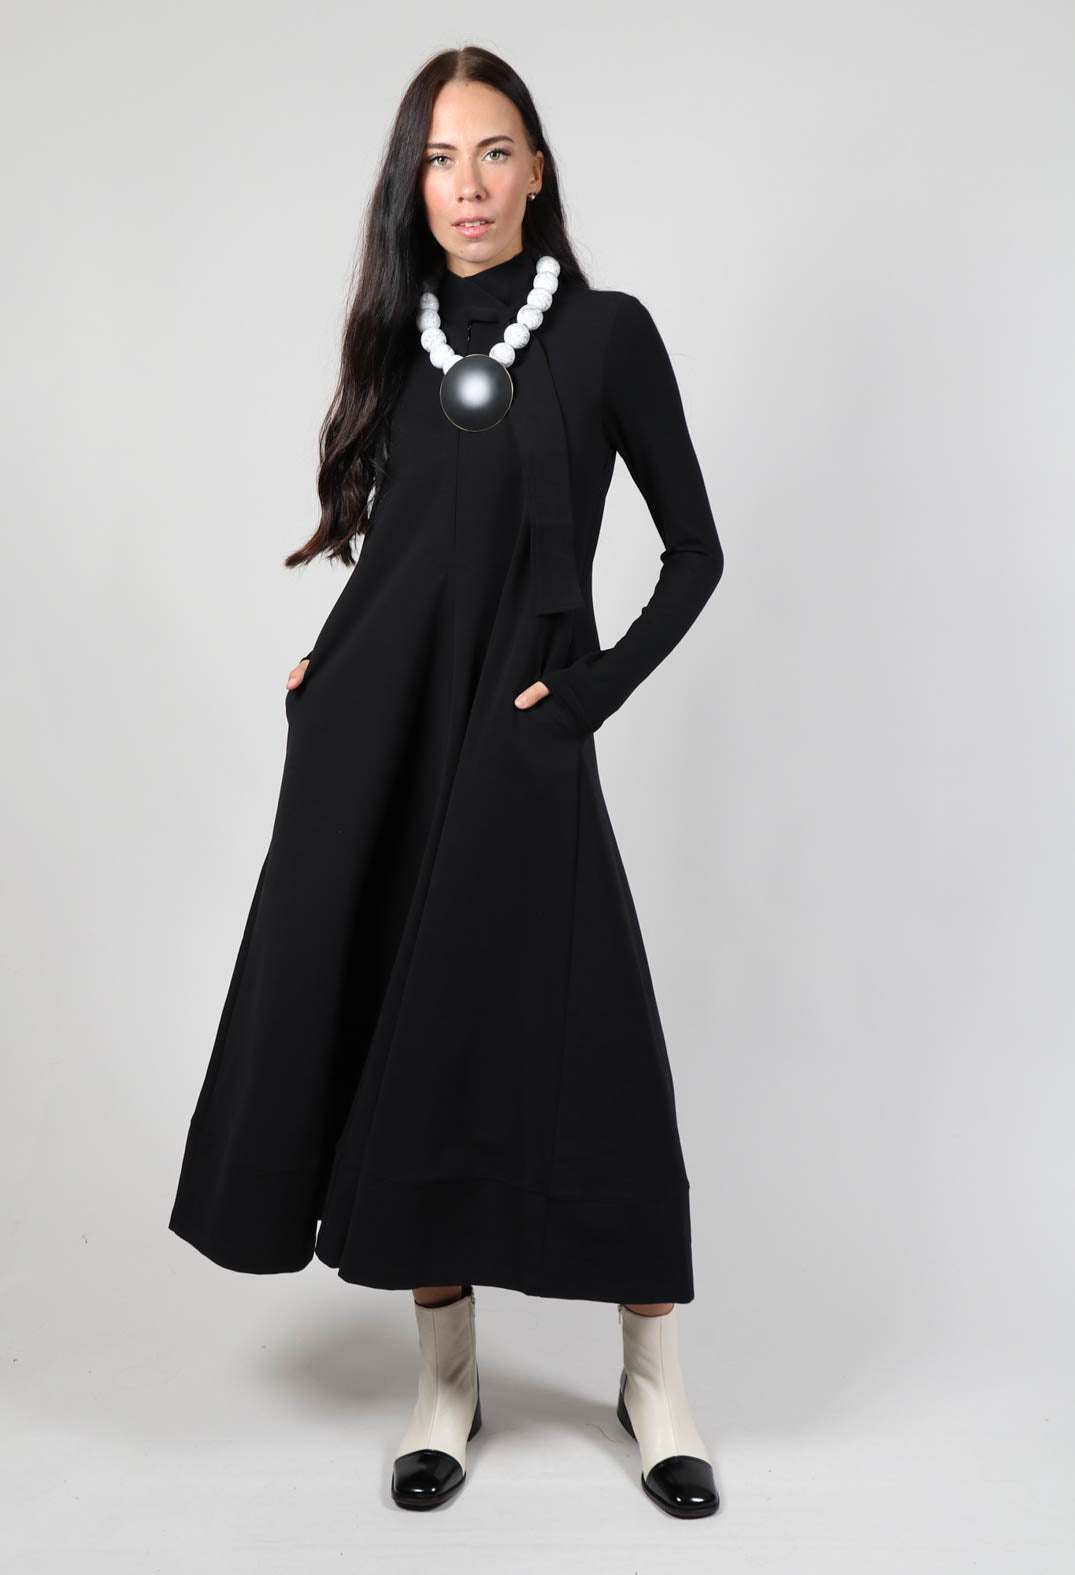 Dife A-Line Dress in Black